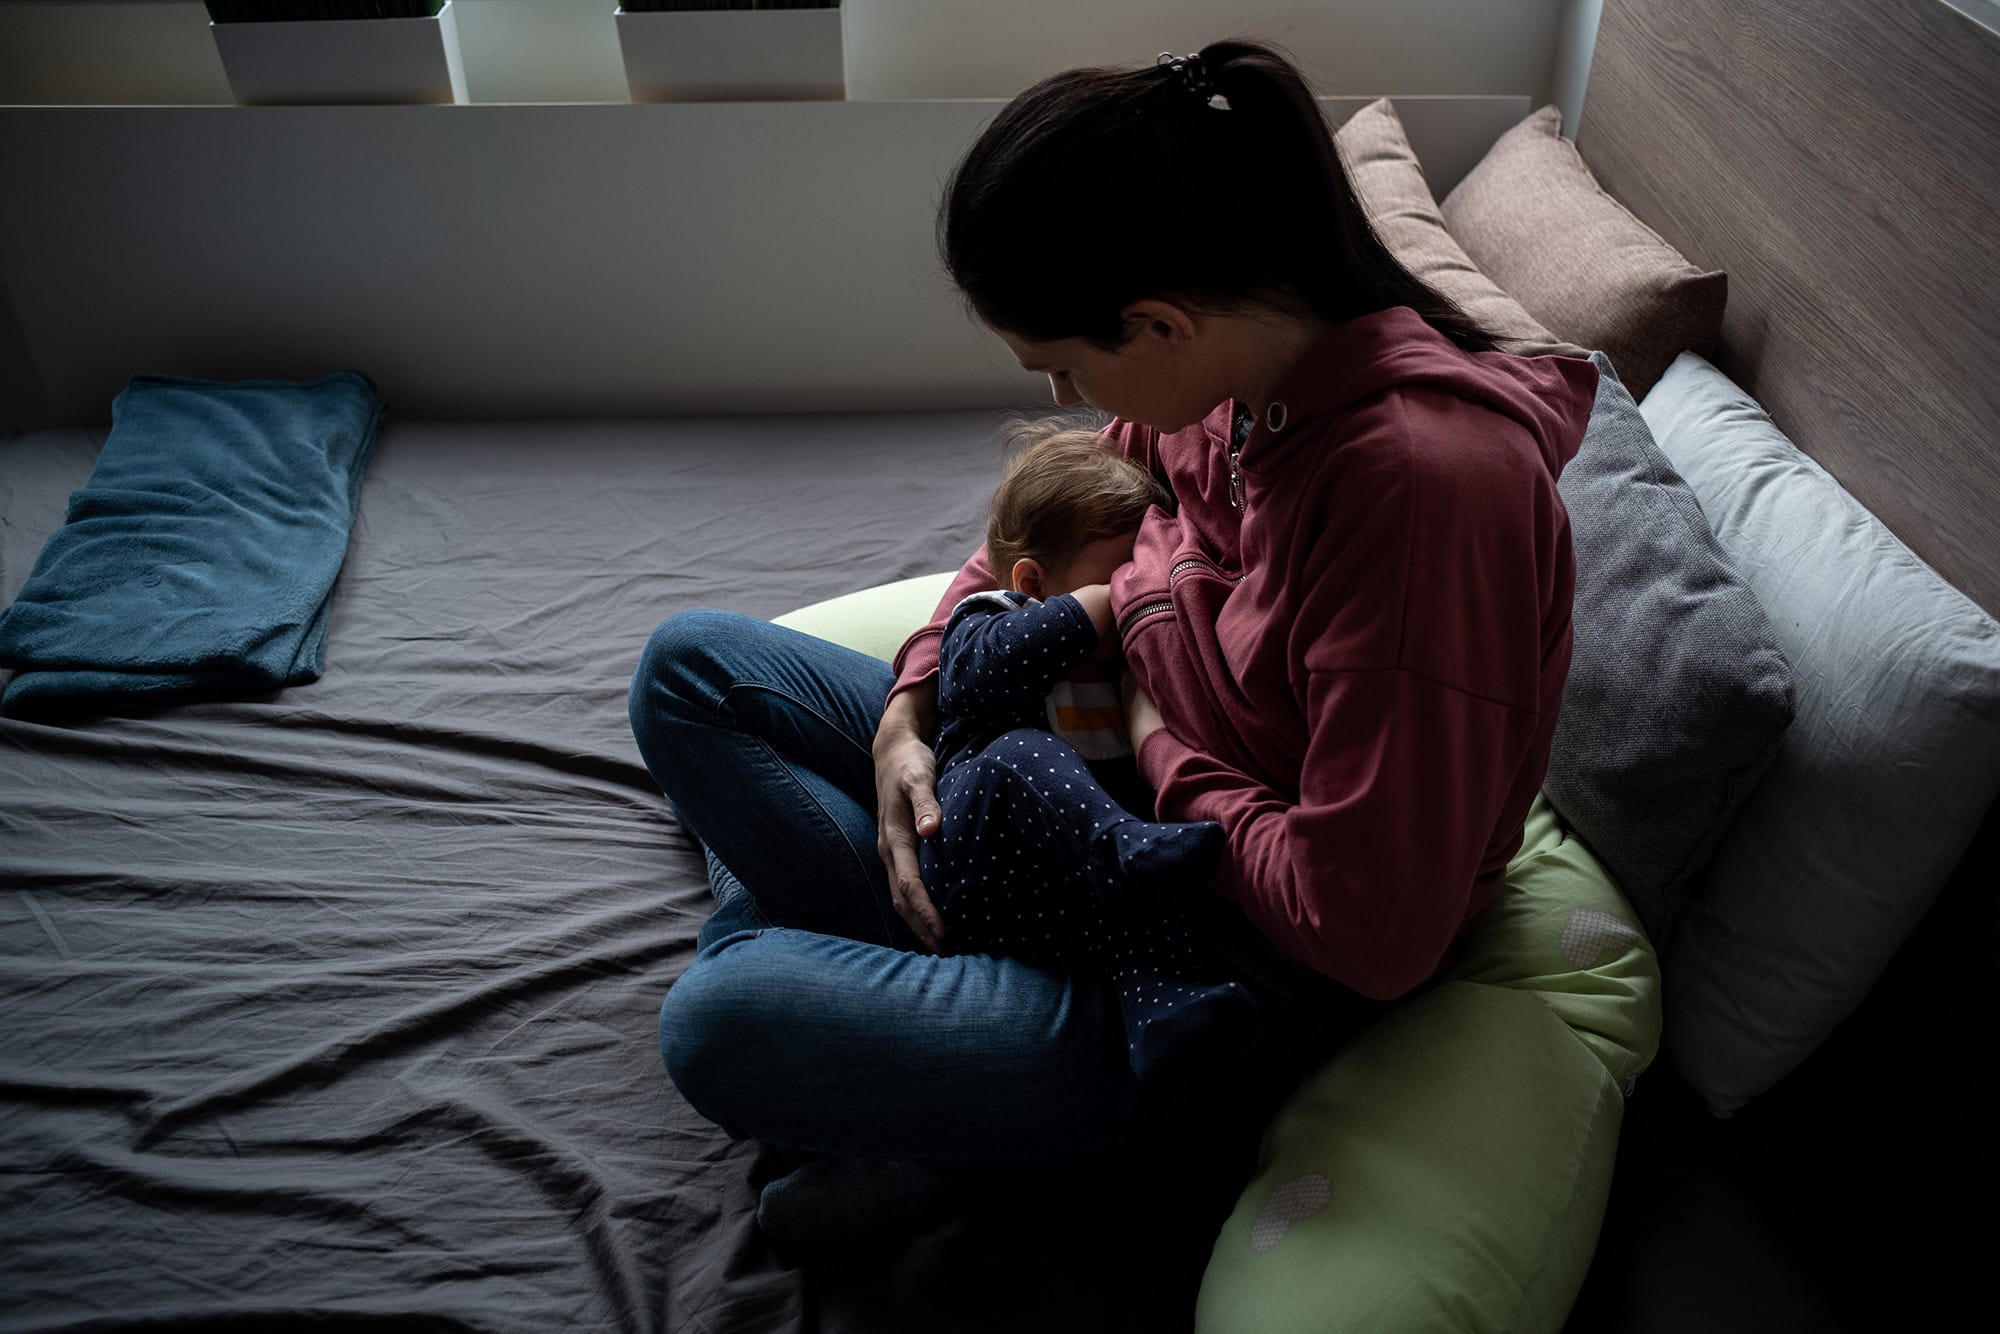 Mother breastfeeding child in bedroom